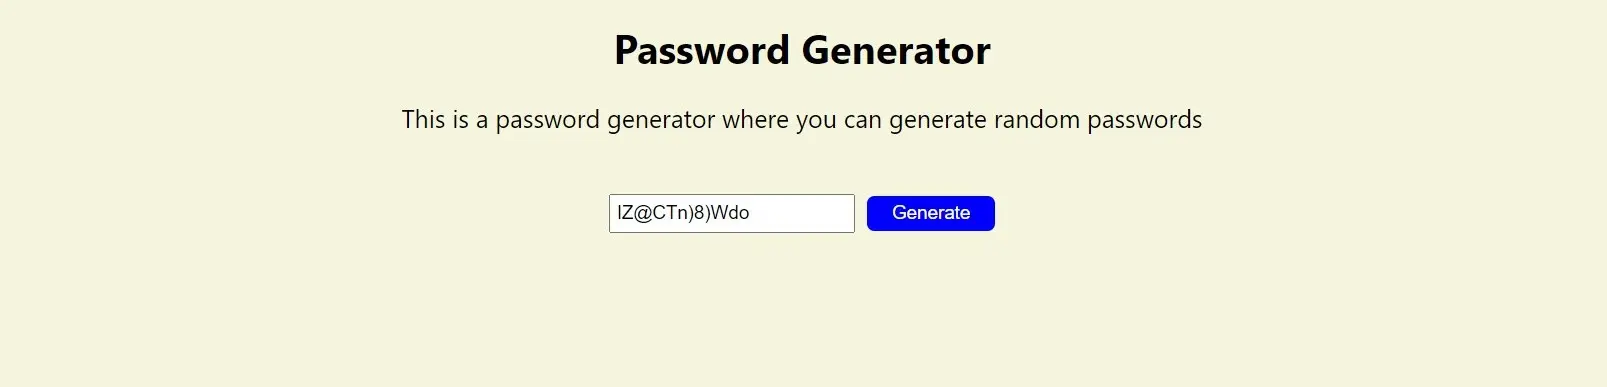 JavaScript Password Generator - Activate the Password Generator